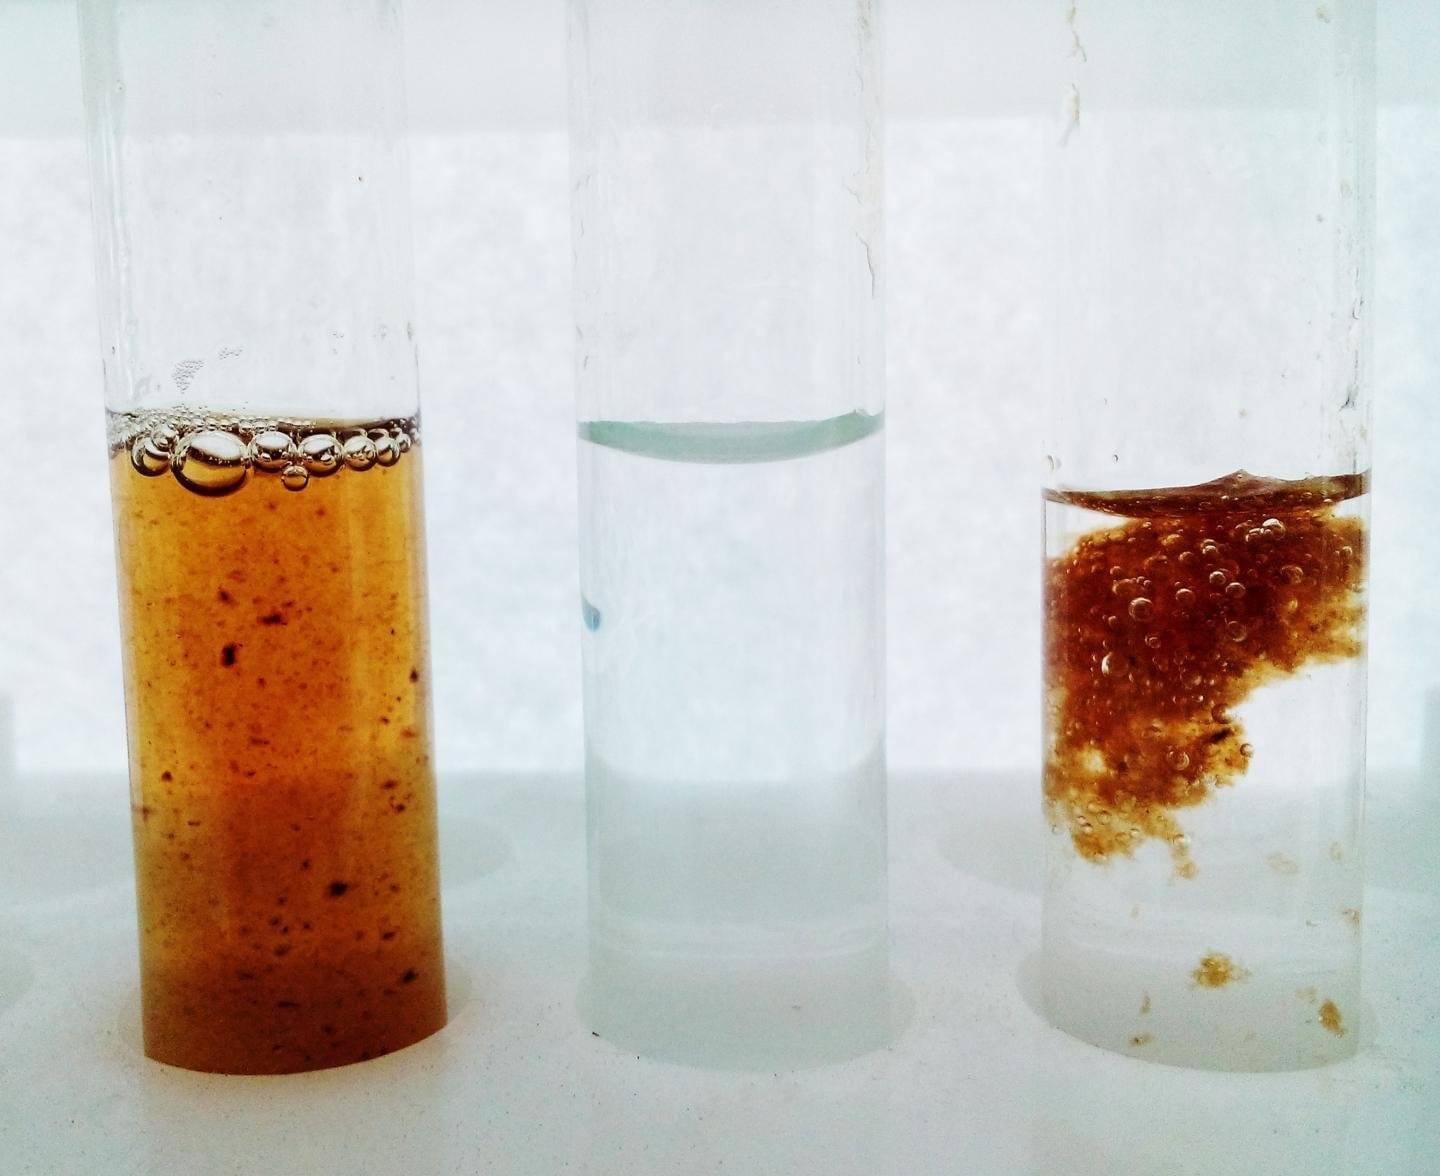 Using inexpensive graphene to purify water